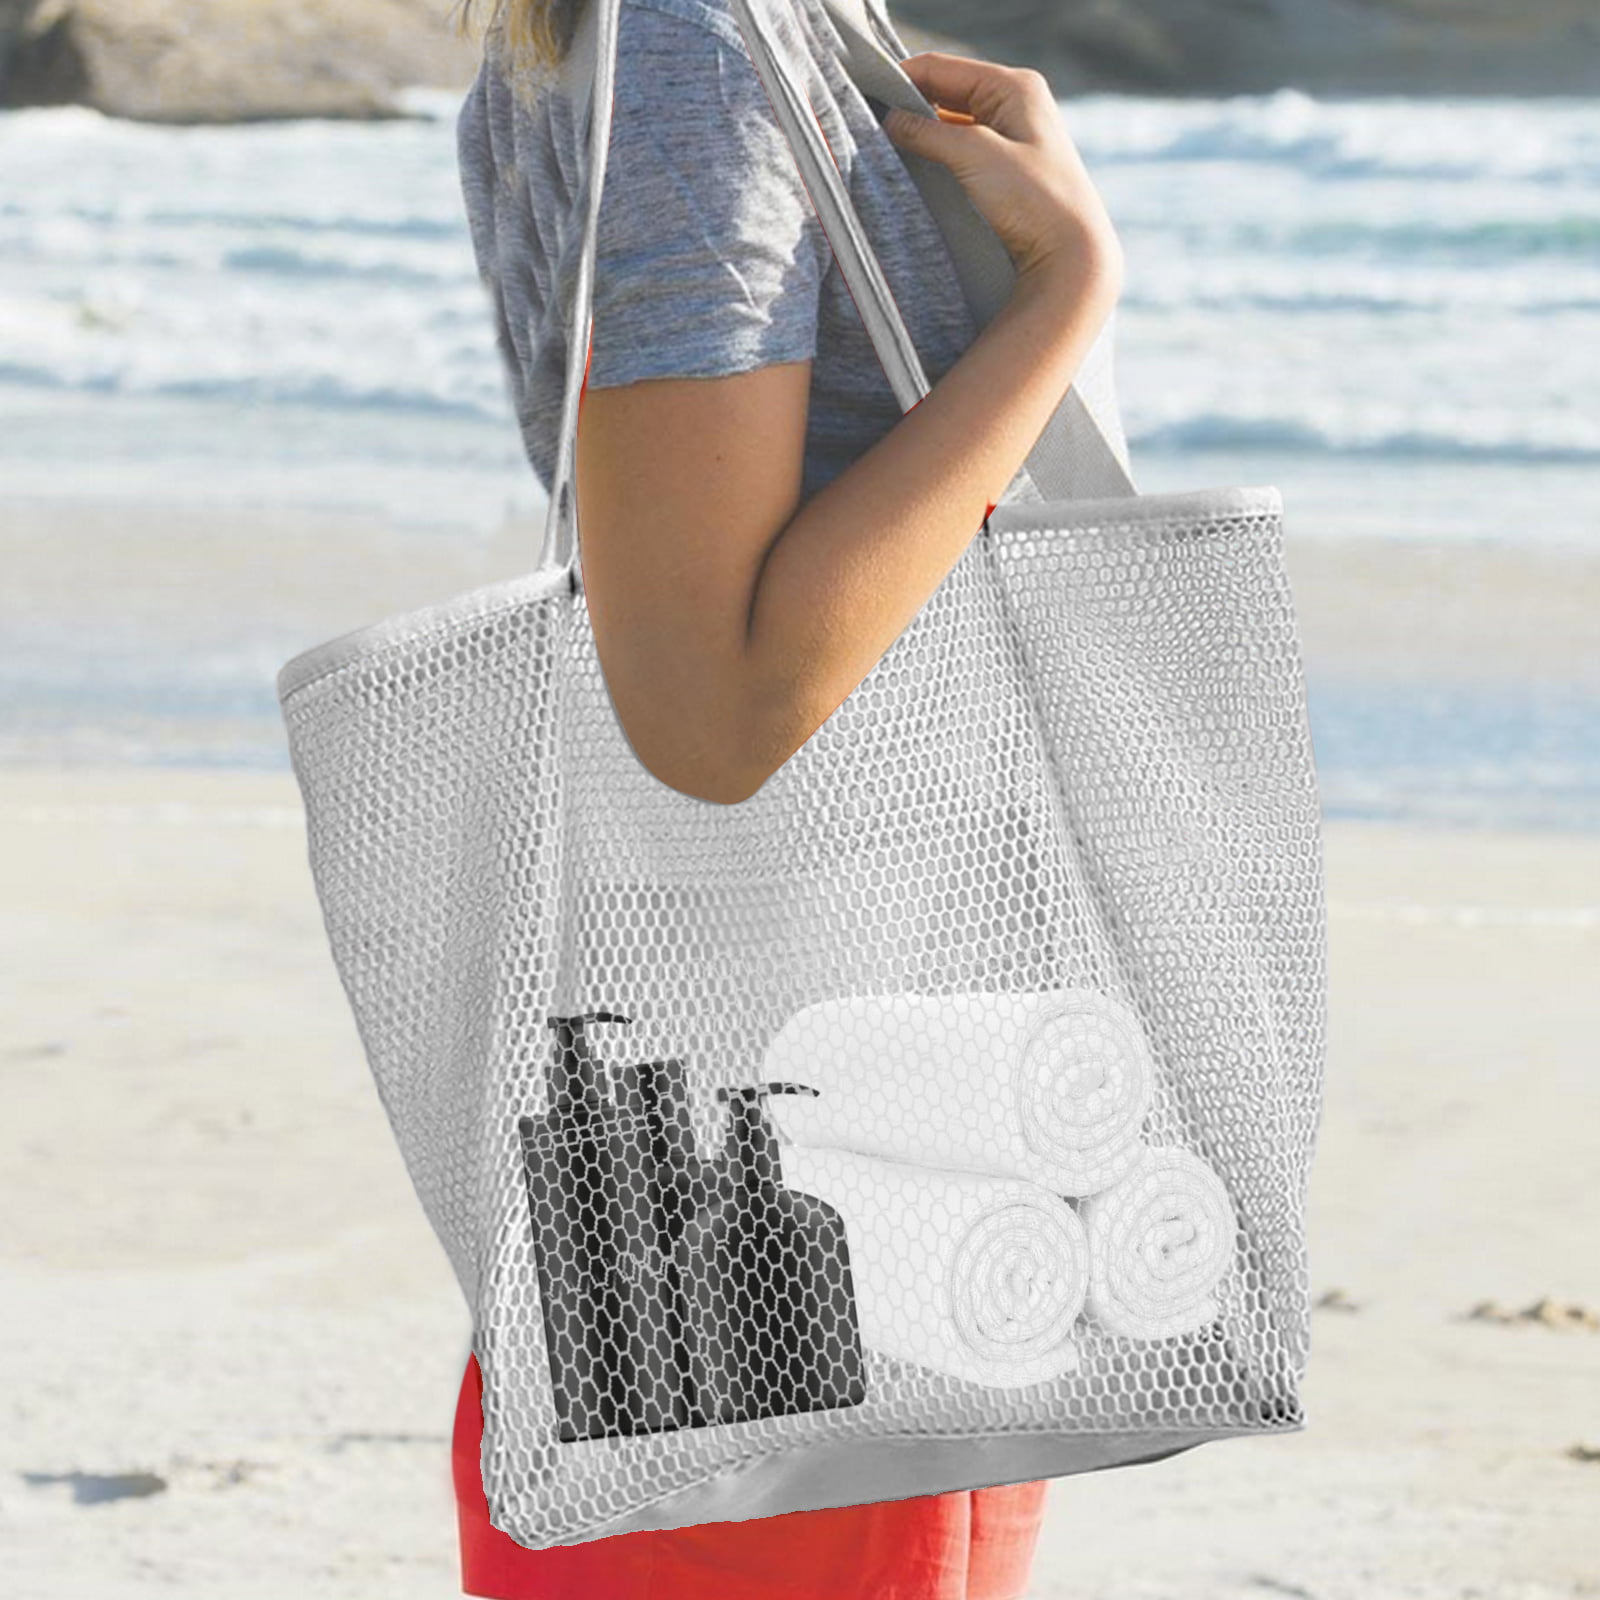 Red Suricata XL Mesh Beach Bag Tote - Celeste Blue & Grey